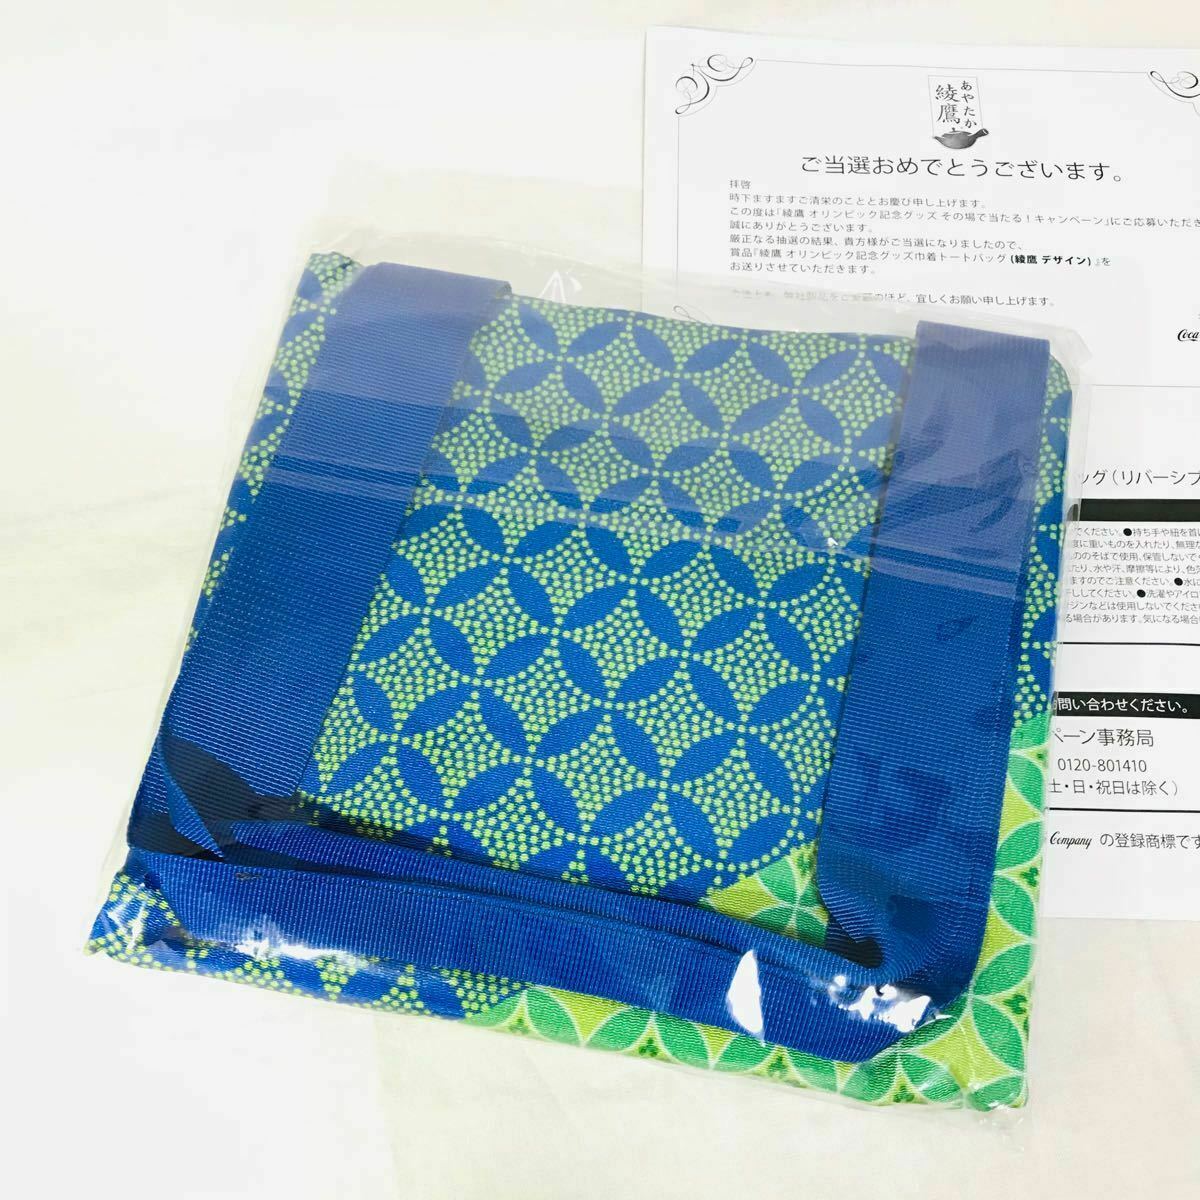 New Unopened Item Ayataka Design Tote Bag Olympic Commemorative Goods Drawstri